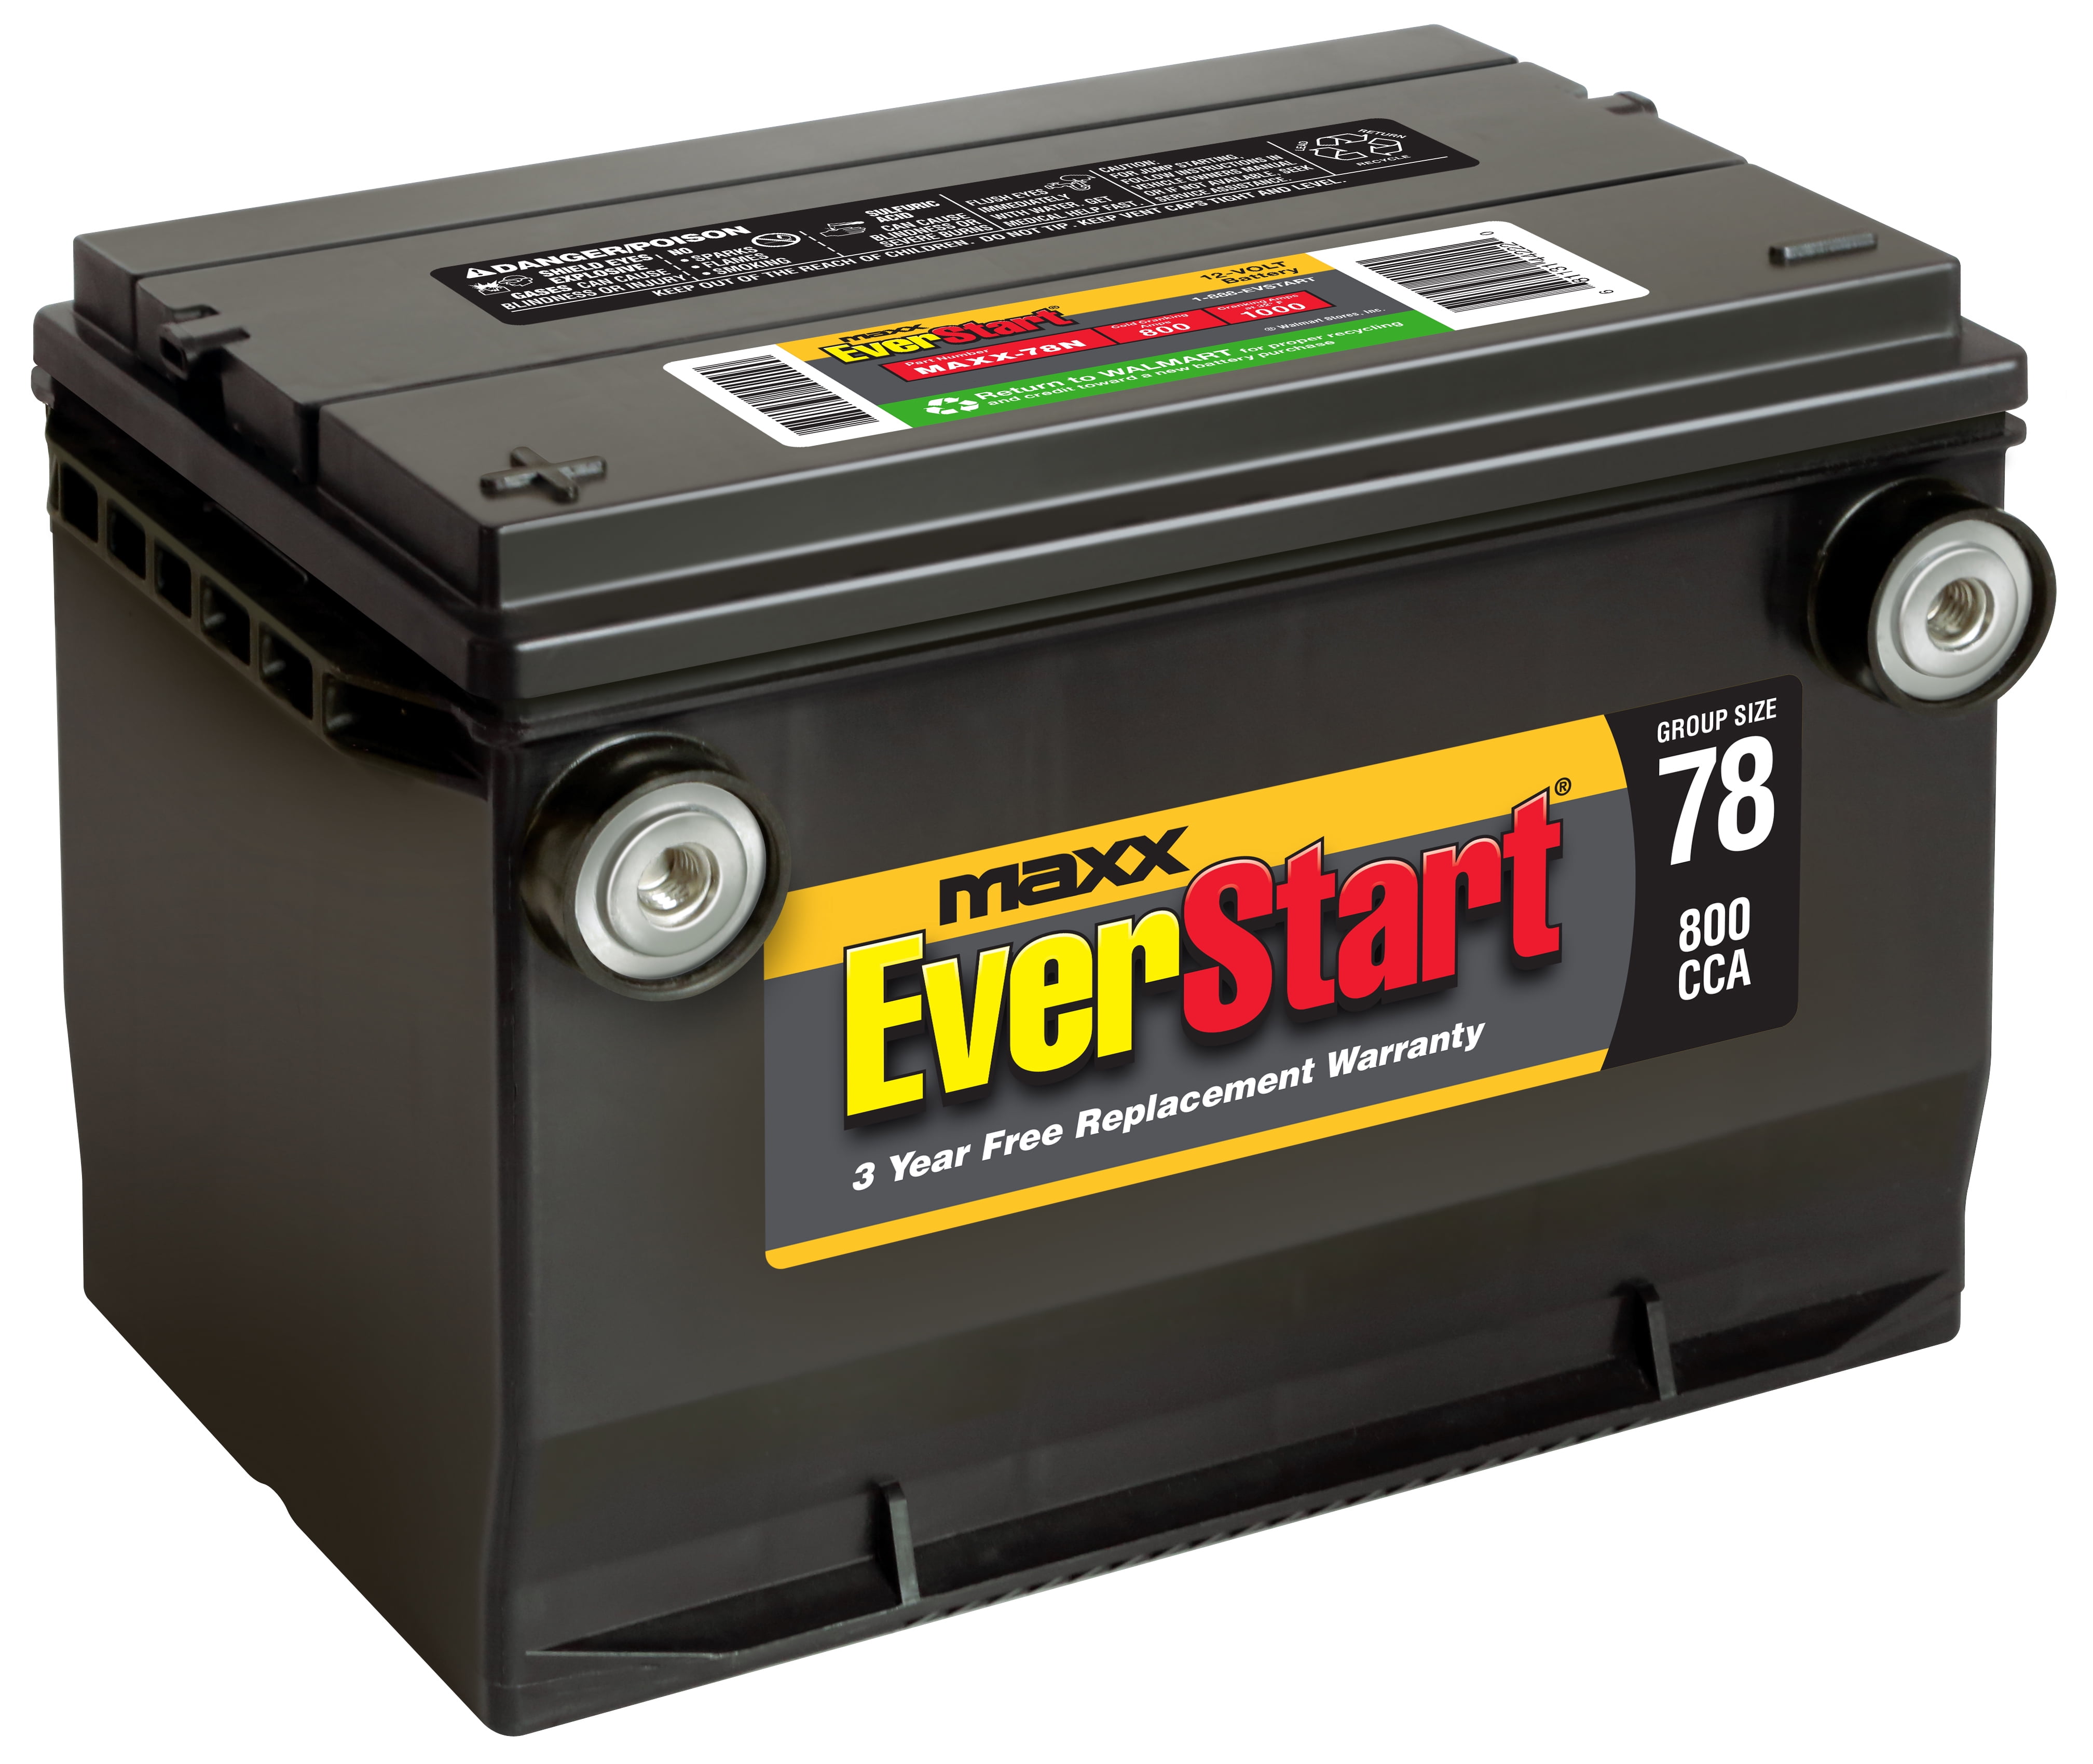 BC1204 AGM 12V Battery for 18-40lb Trolling Motor Charger/Maintainer V35-857